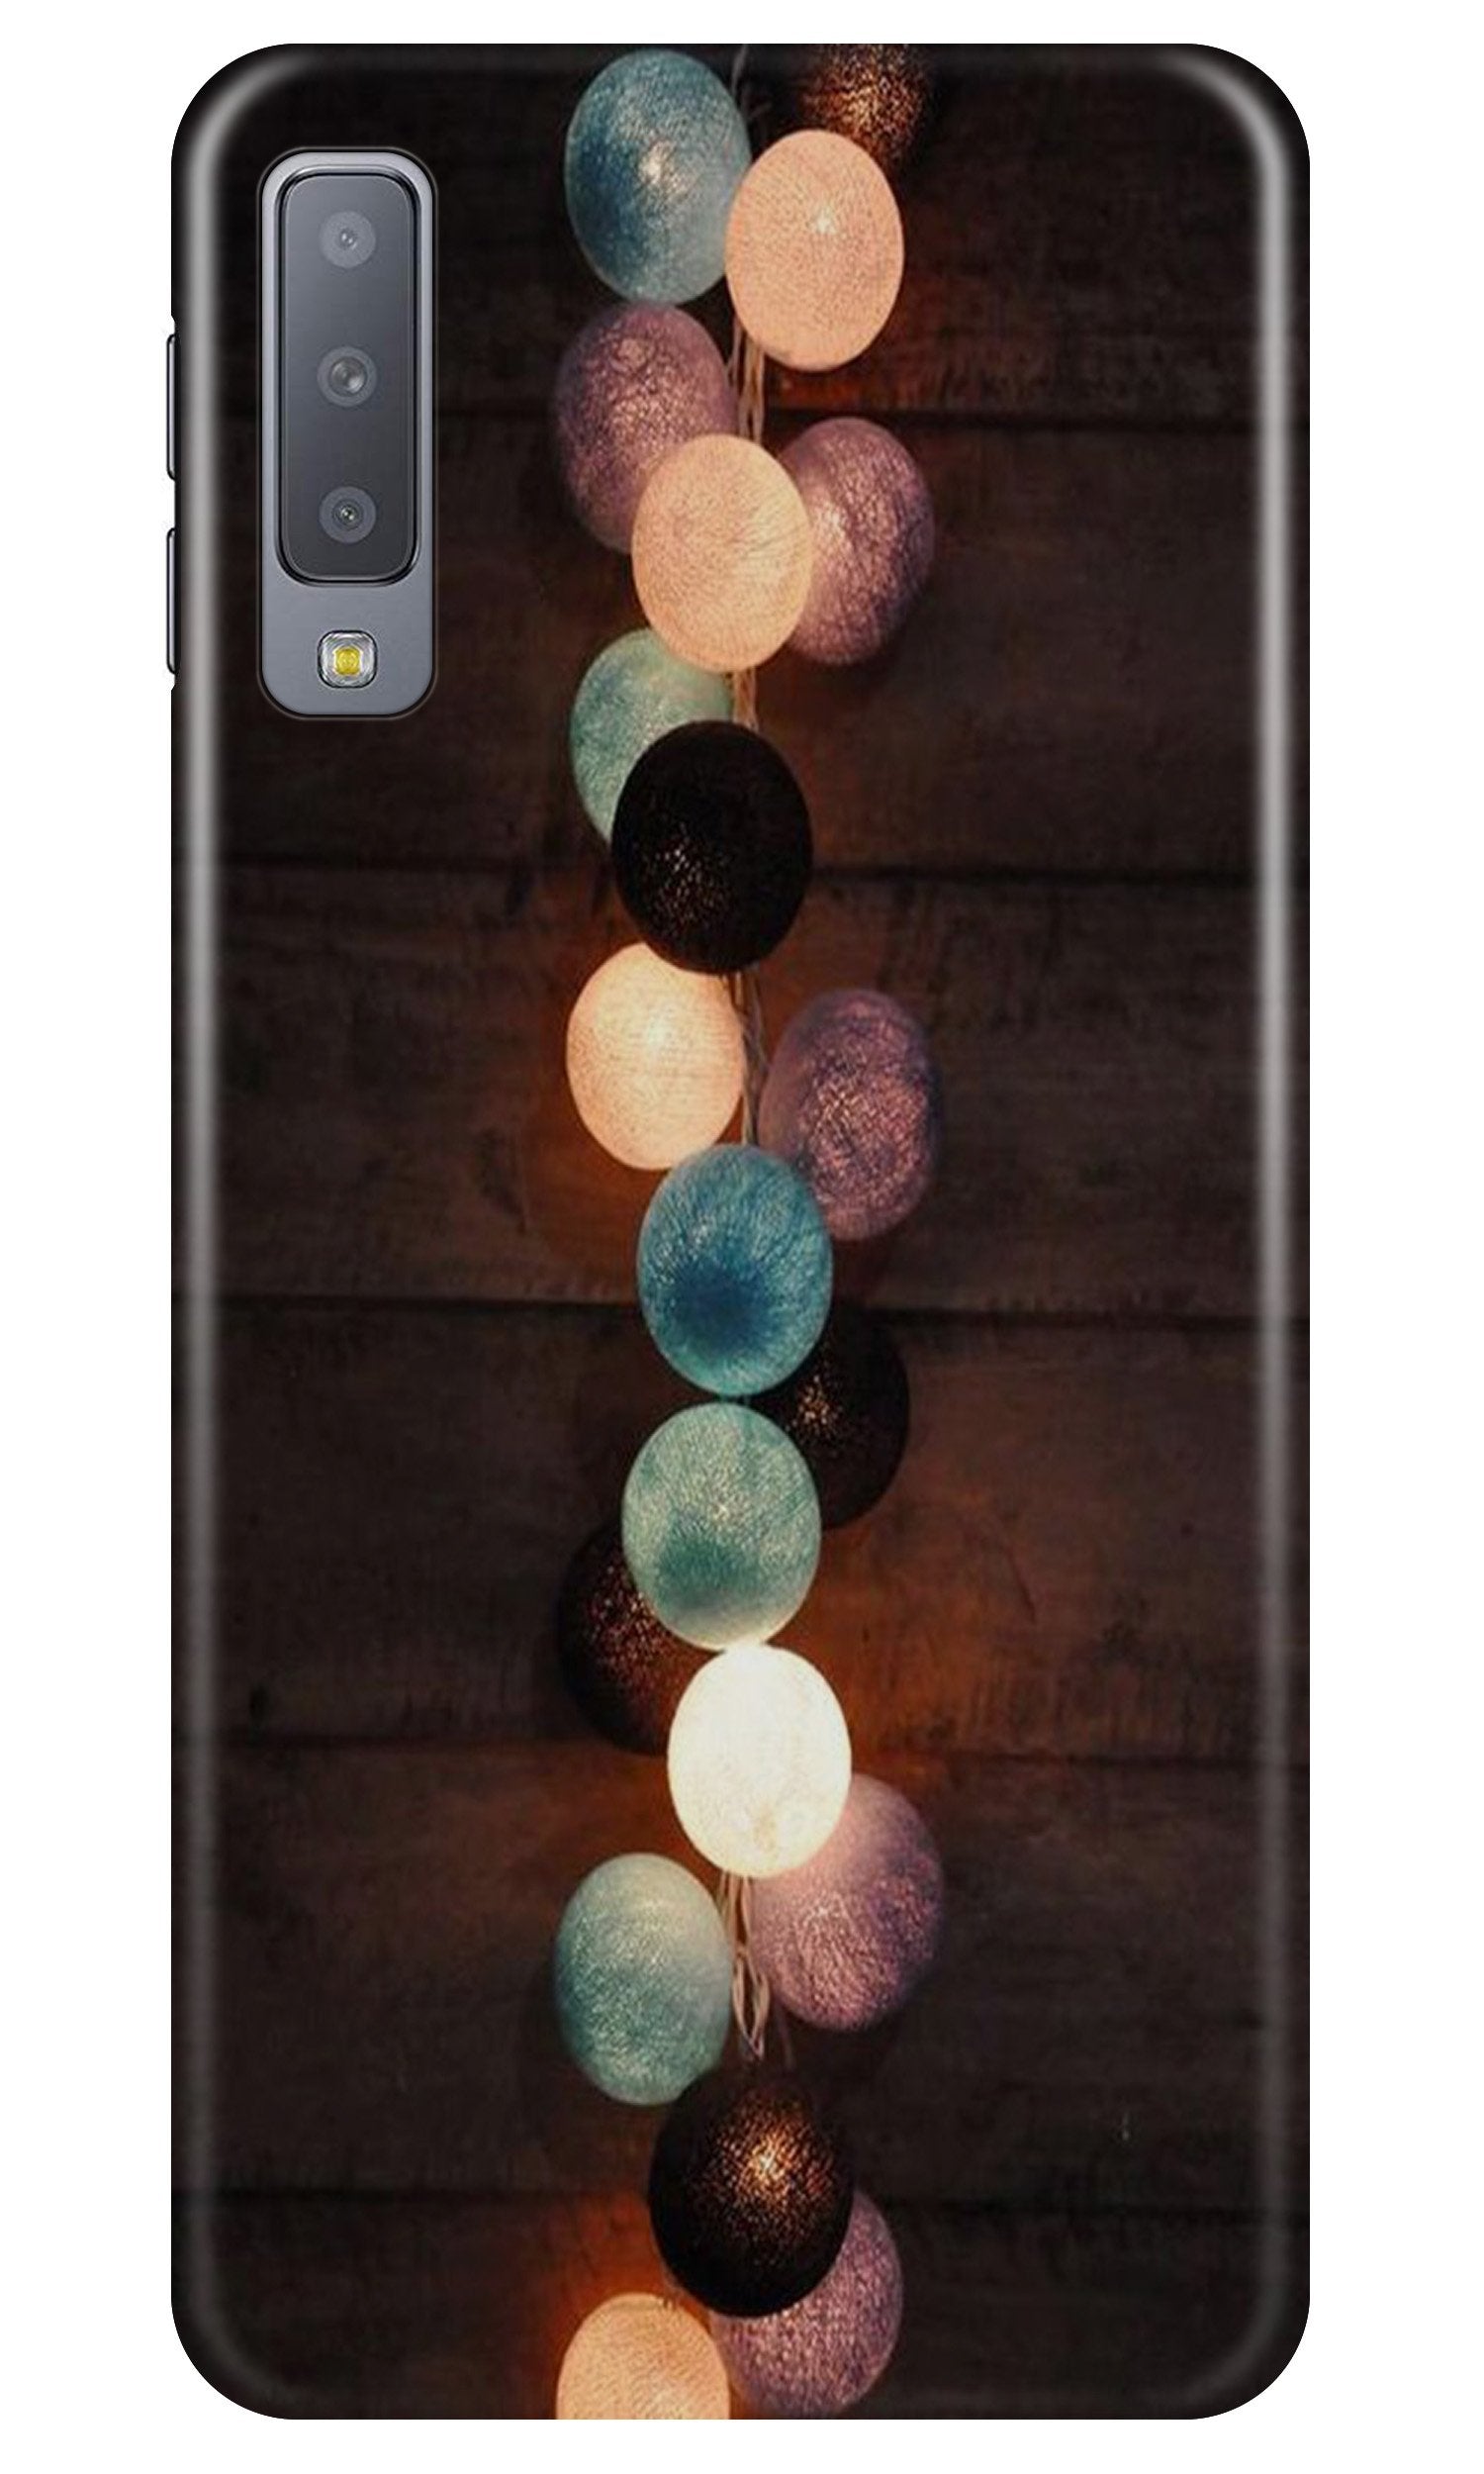 Party Lights Case for Samung Galaxy A70s (Design No. 209)